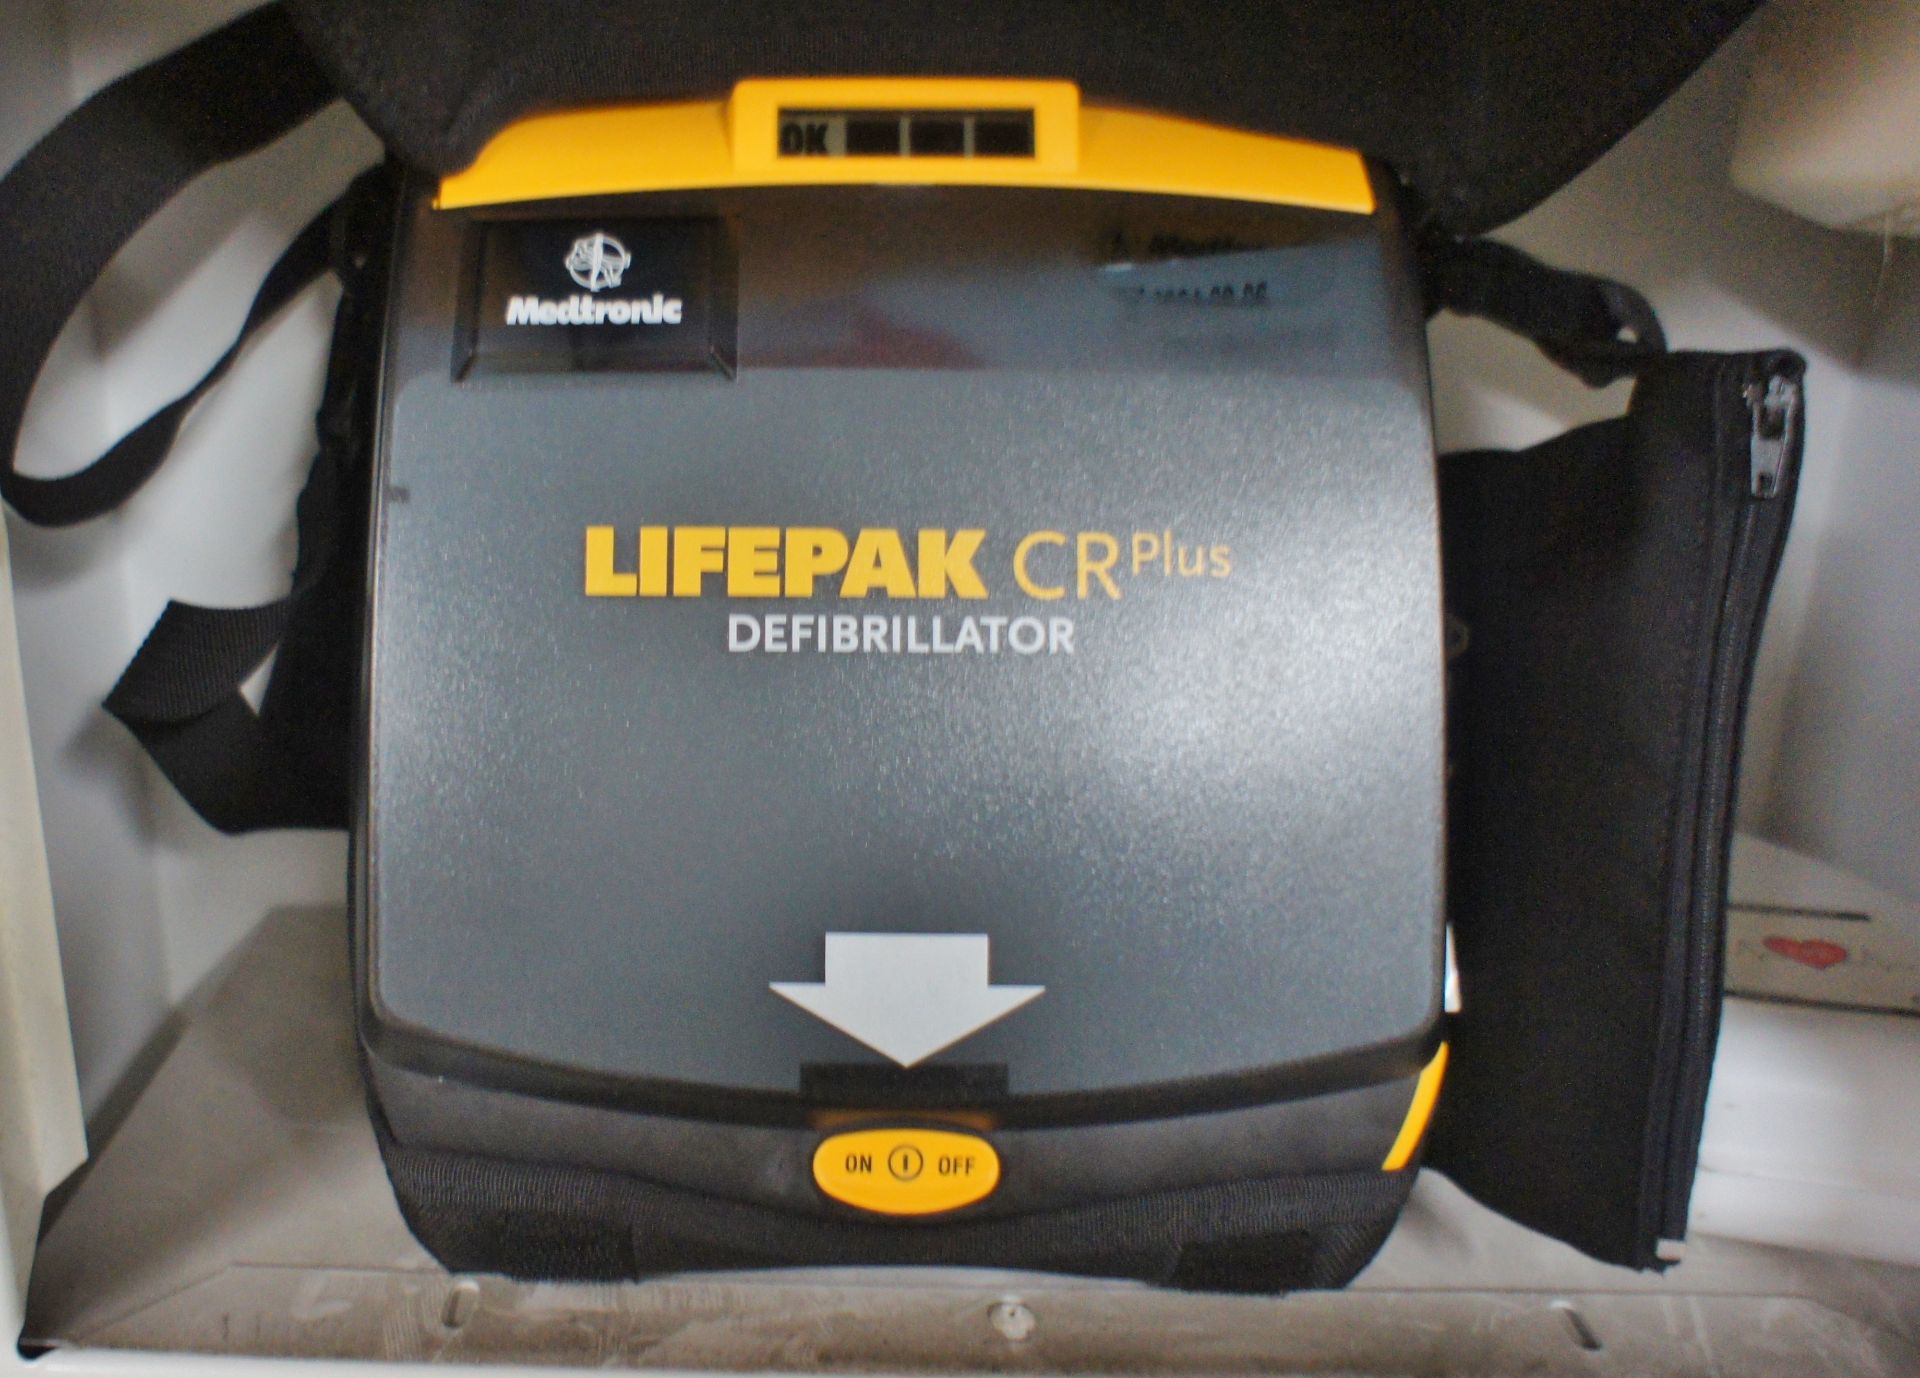 Medtronic Lifepak defibrillator - Image 3 of 4